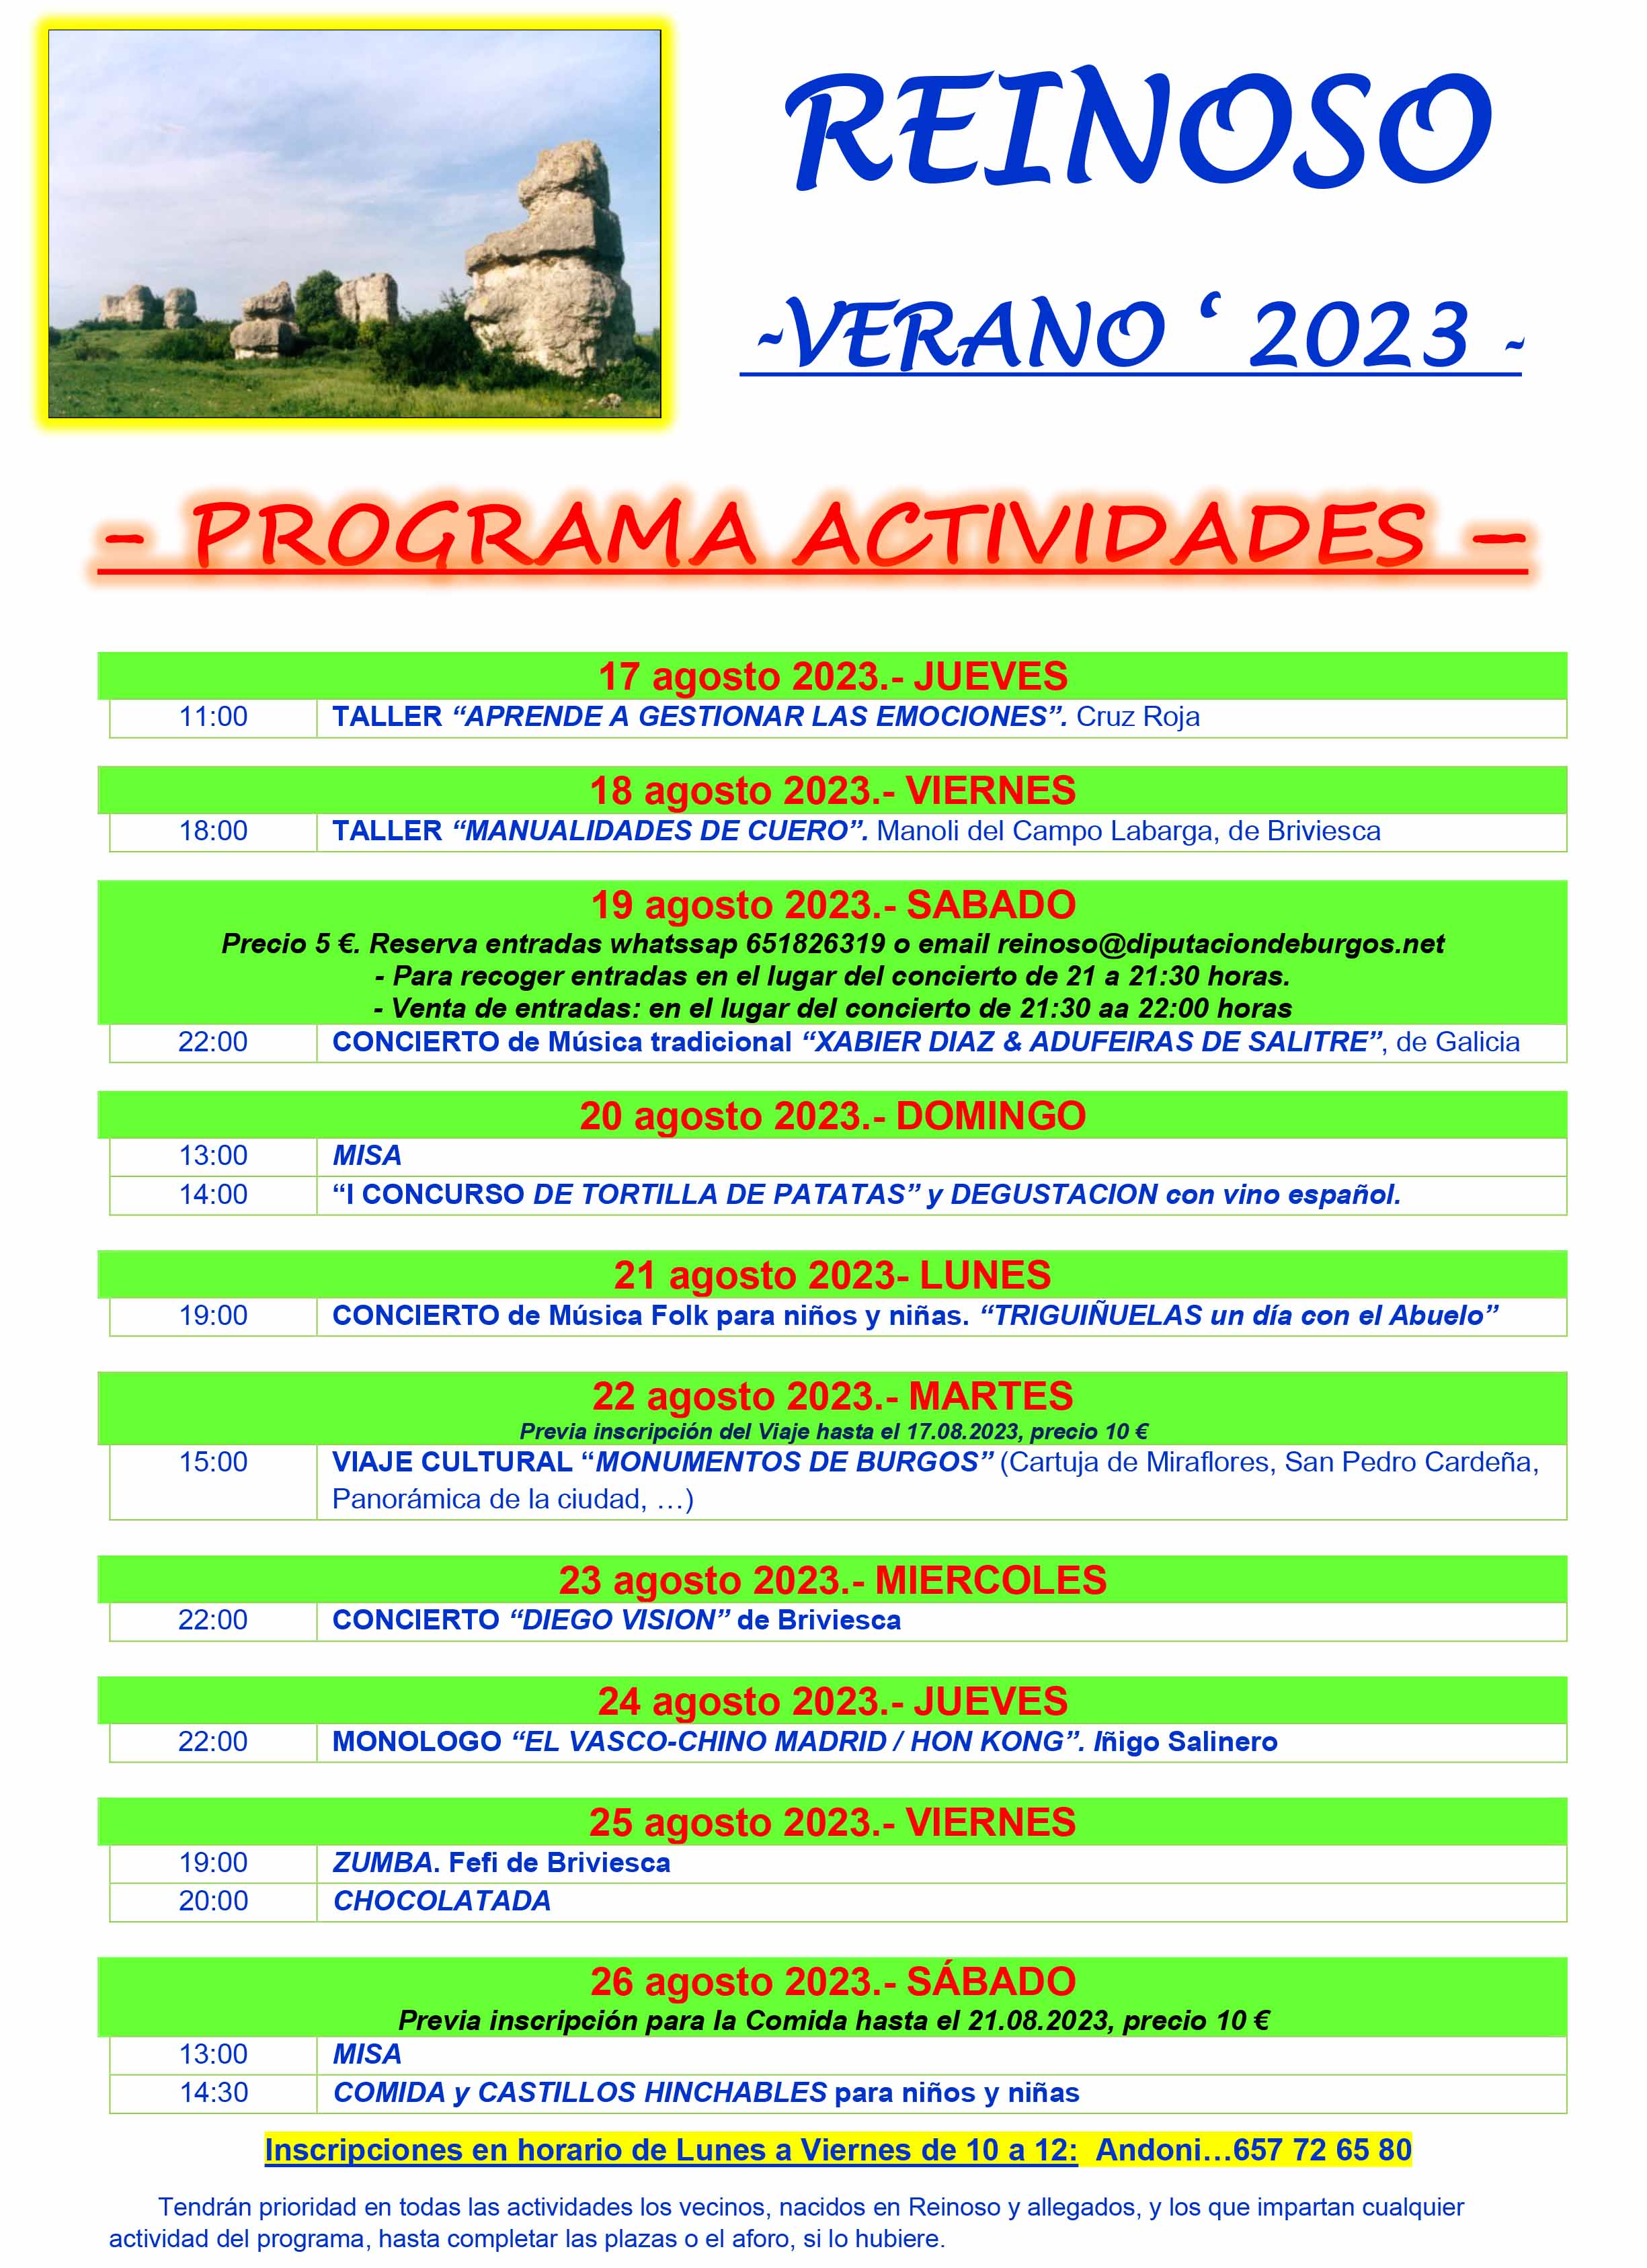 Programa actividades Verano 2023